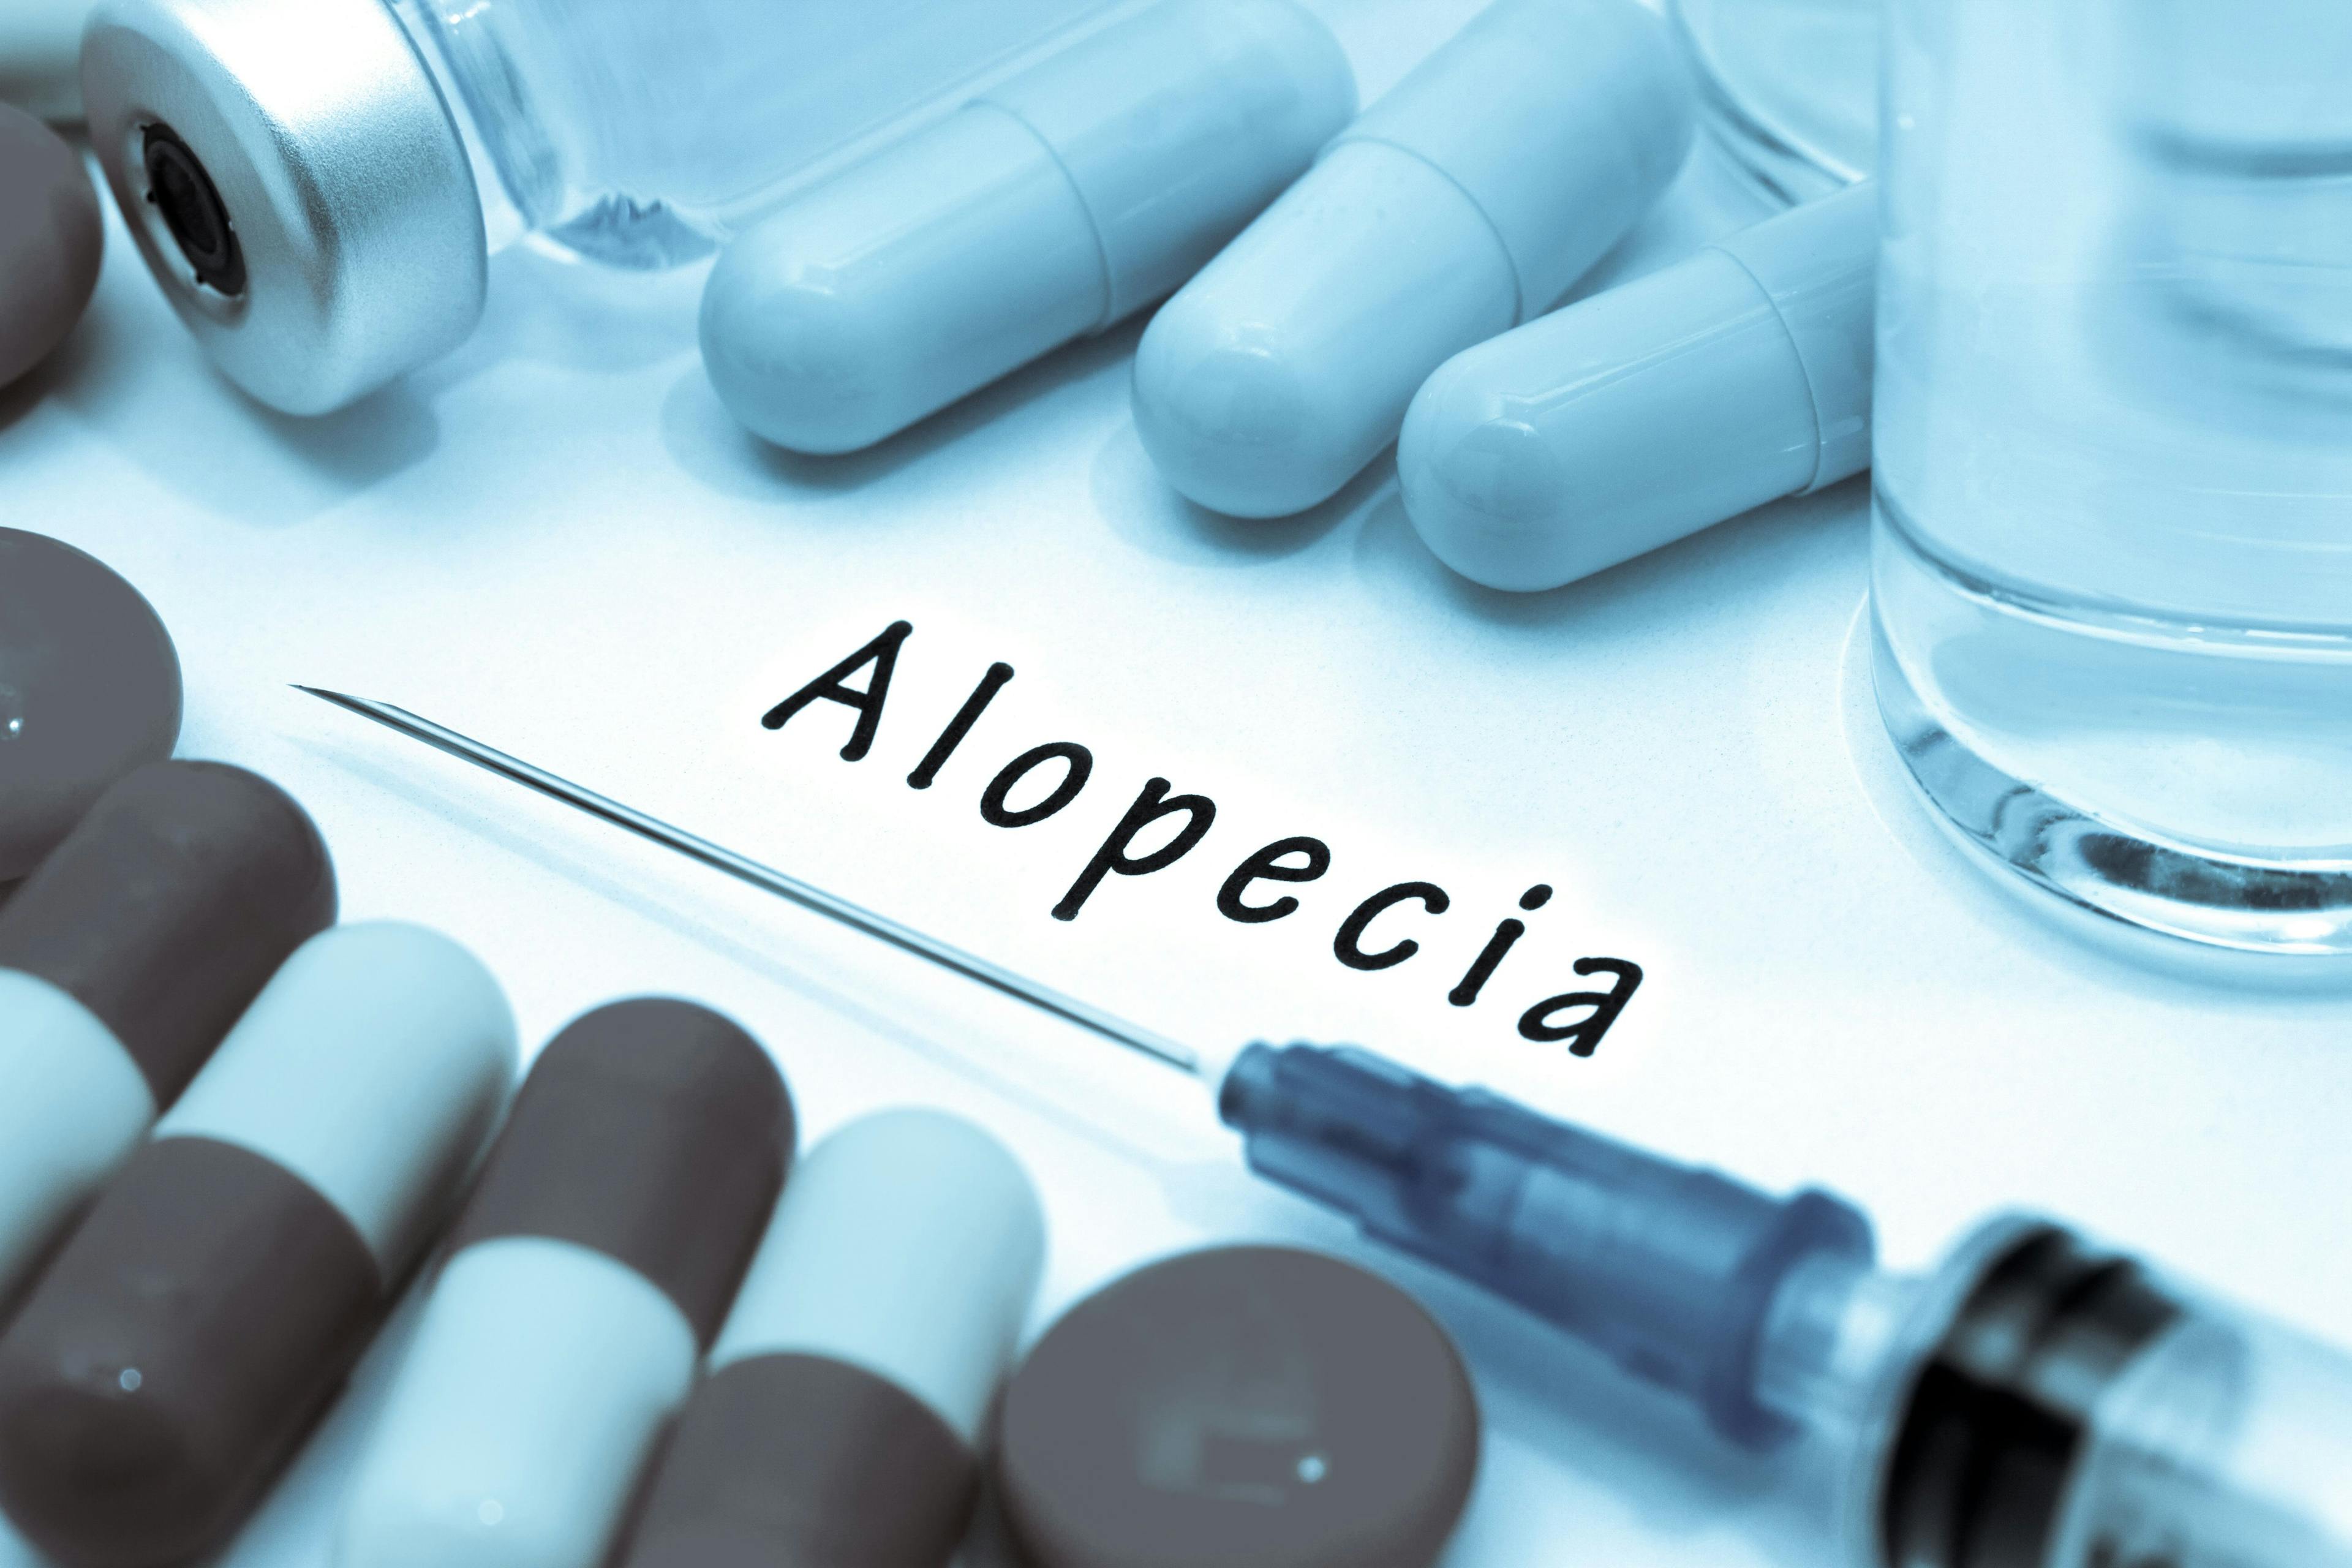 Alopecia surrounded by medication | Image Credit: greenapple78 - stock.adobe.com